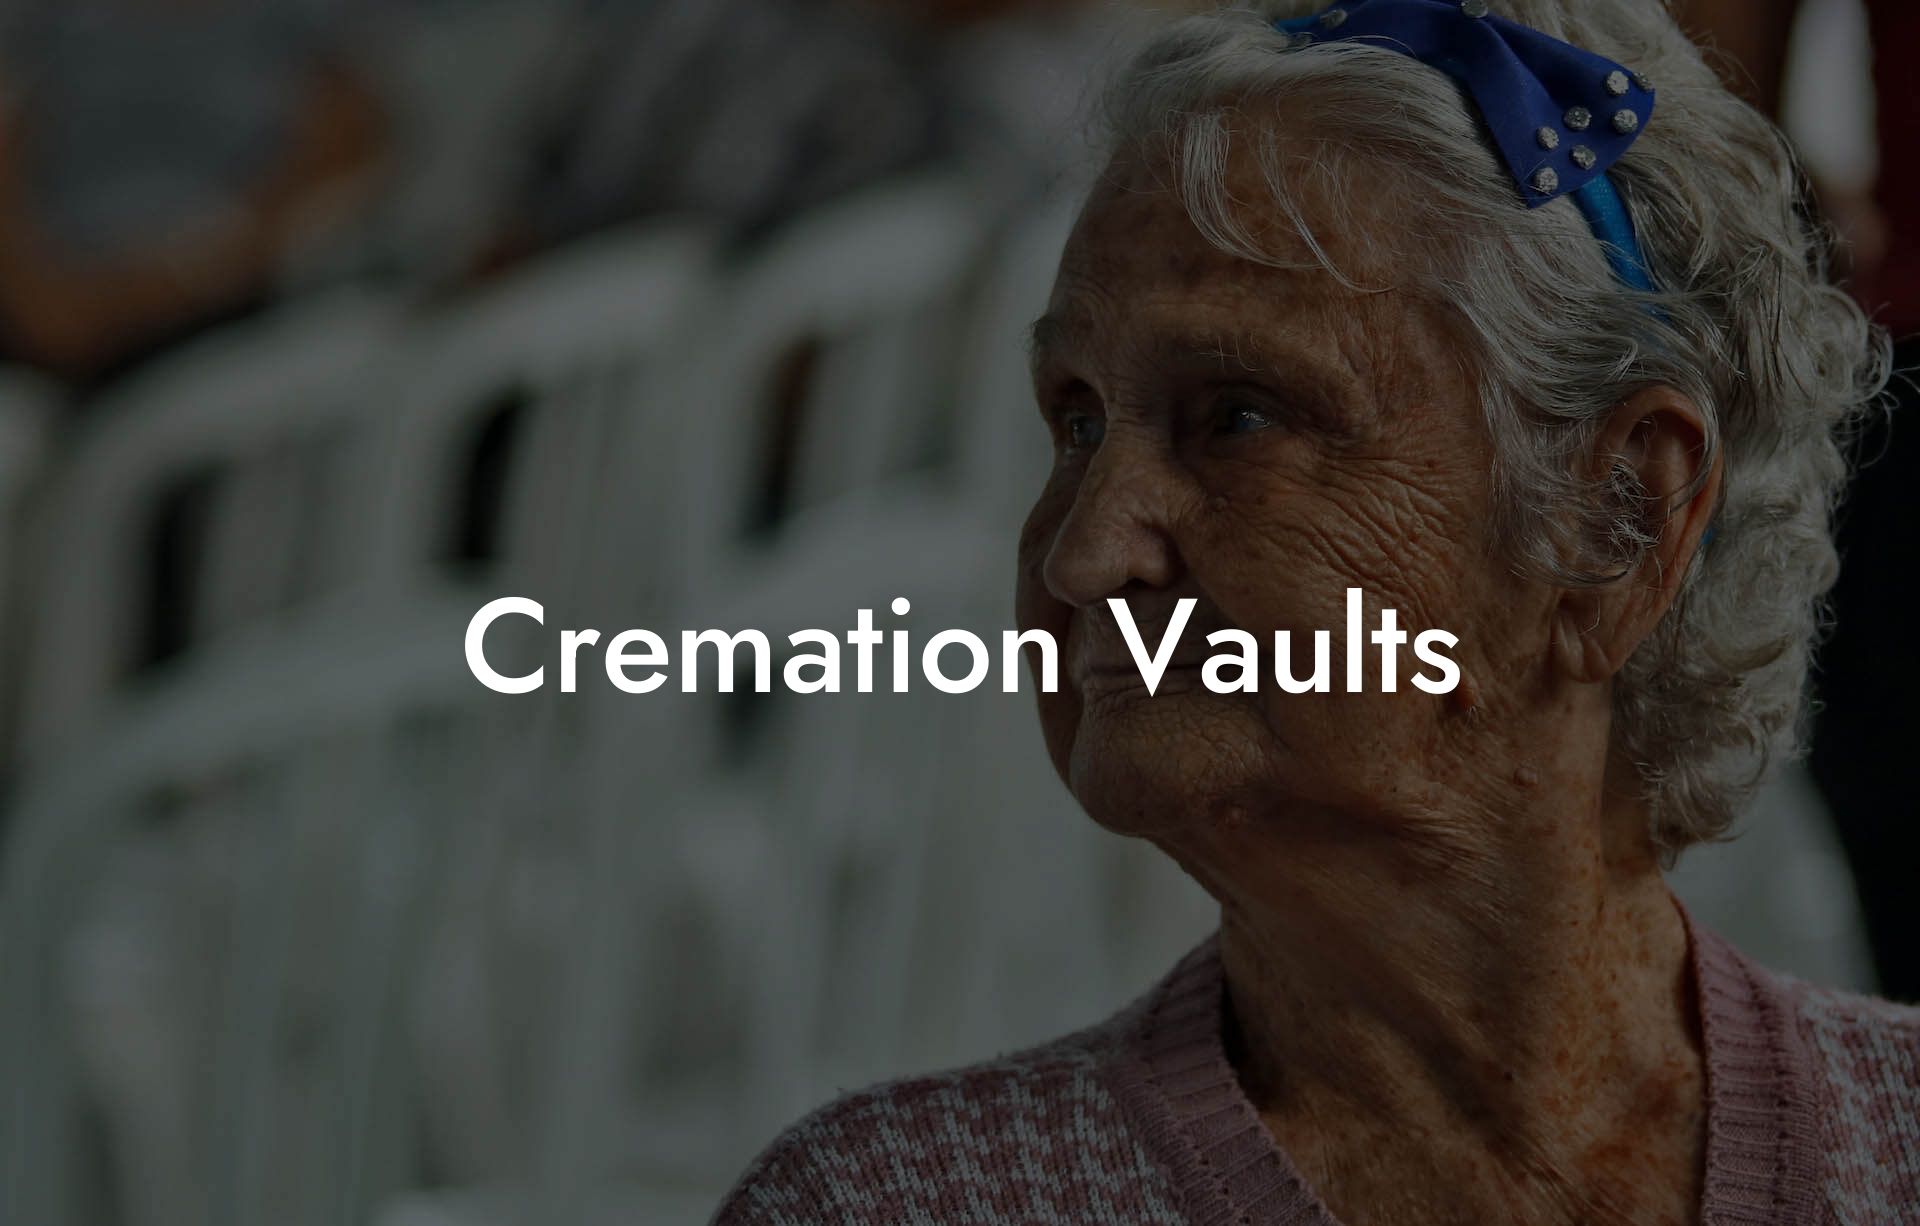 Cremation Vaults